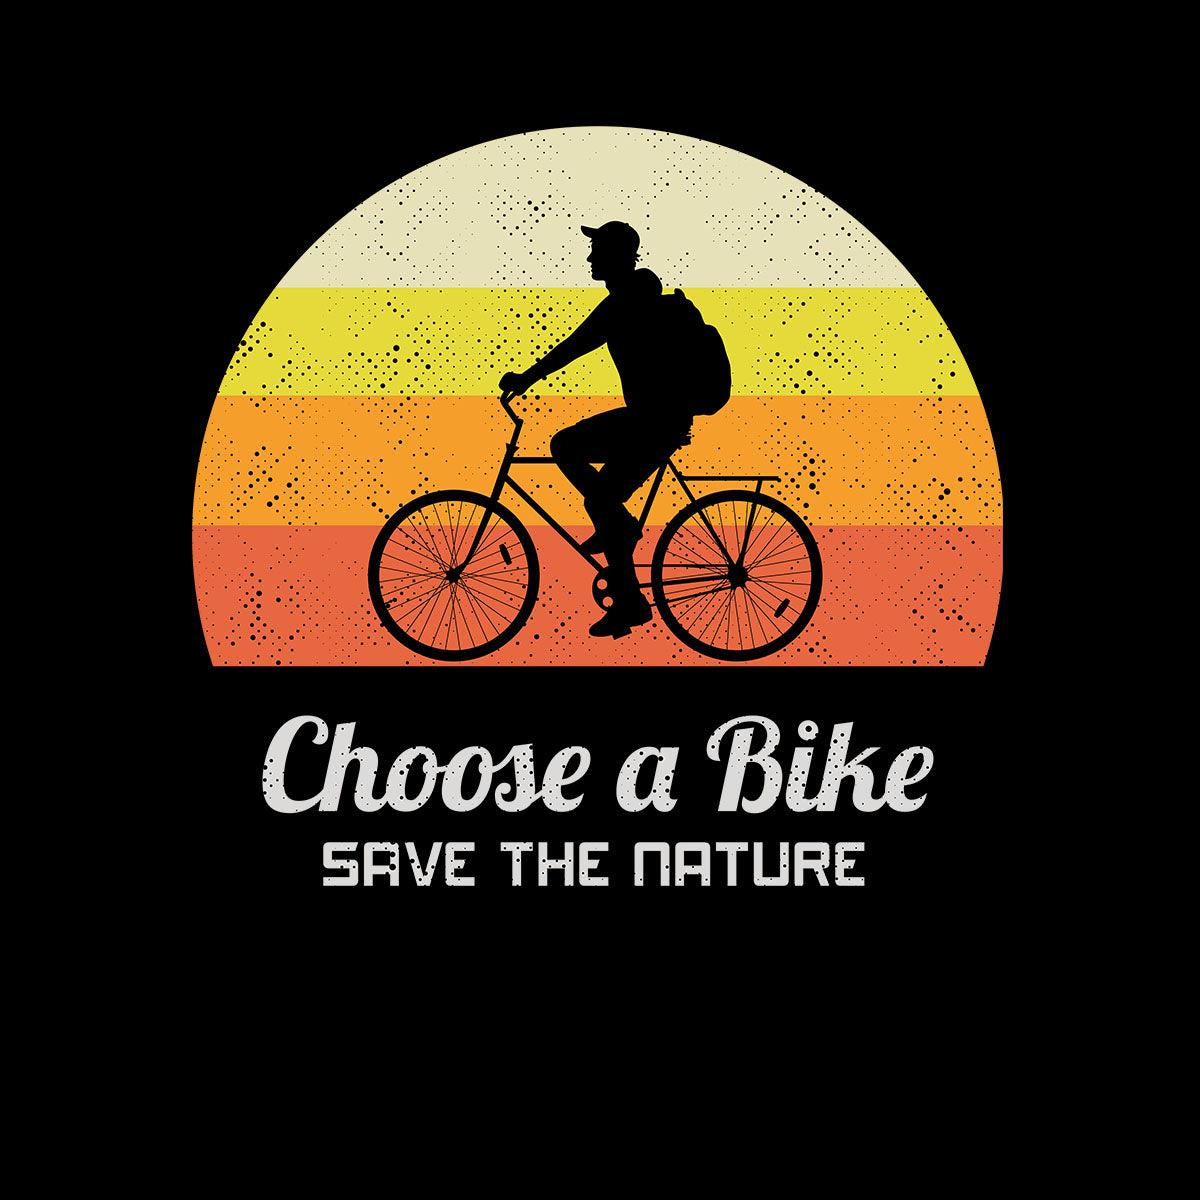 Cycling T-Shirt Choose a Bike-Save the nature Bicycle Racer Road Adult Unisex T-Shirt - Kuzi Tees